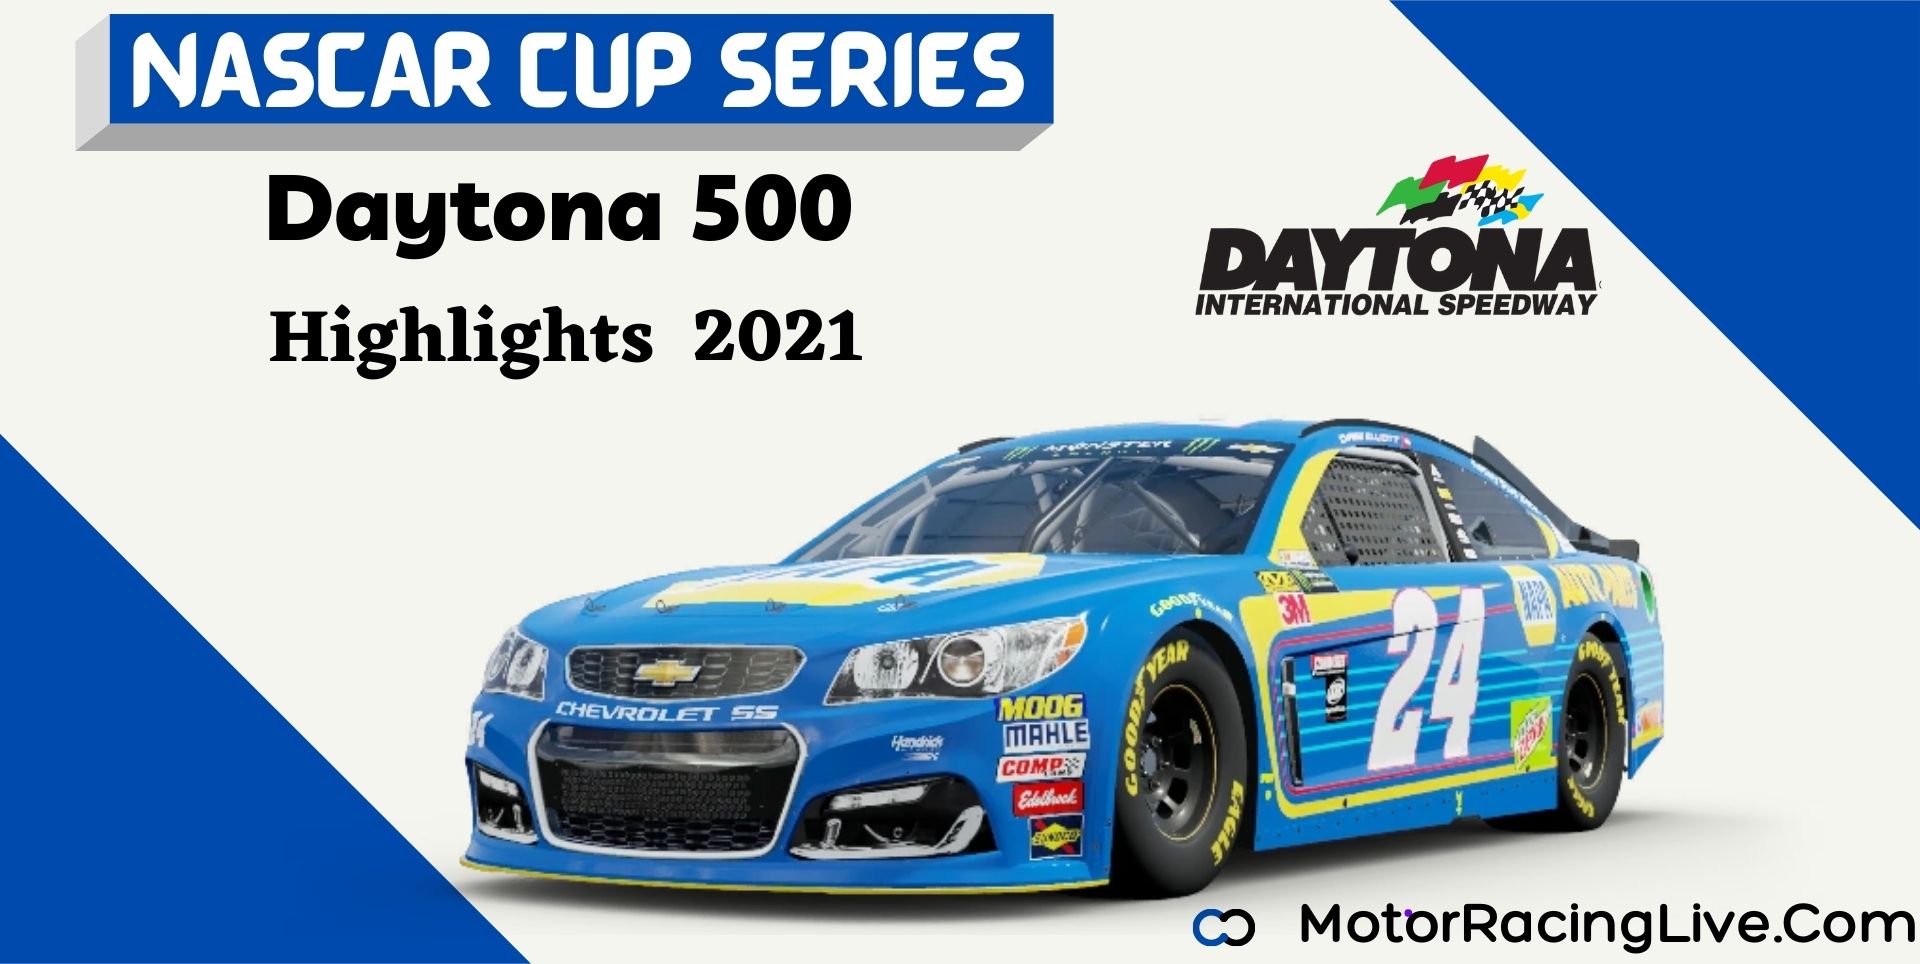 Daytona 500 Highlights 2021 NASCAR Cup Series